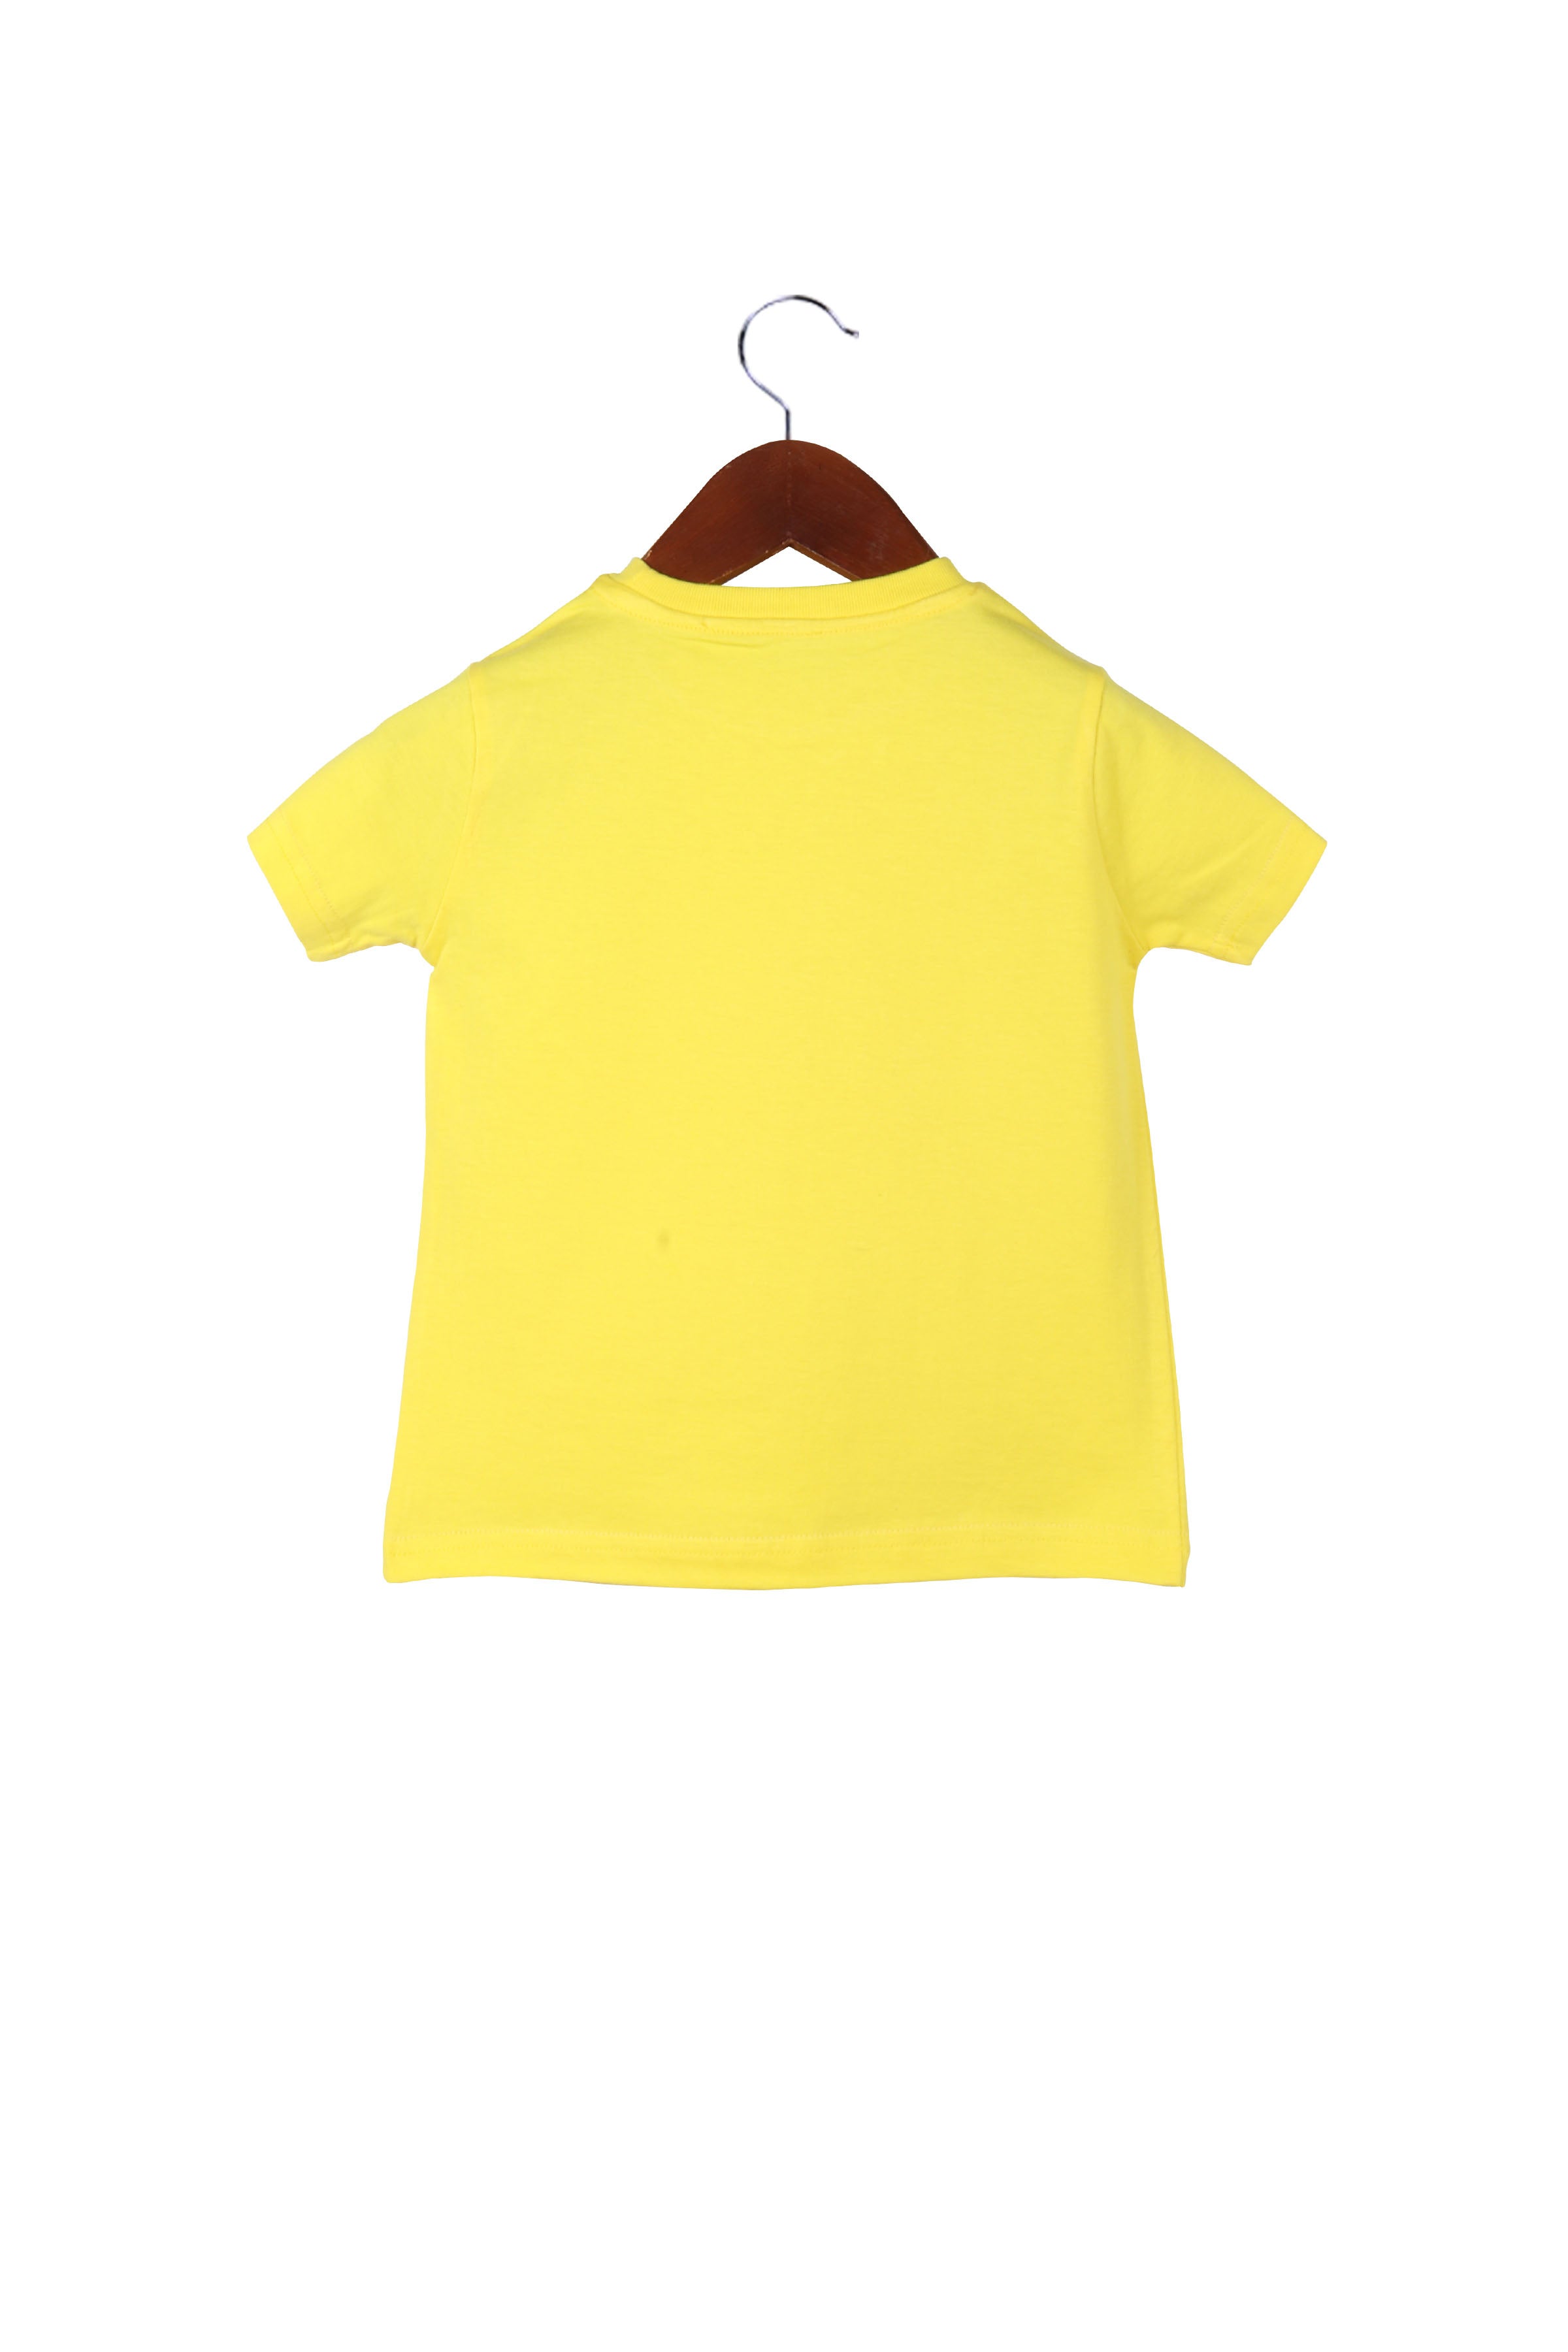 Kids Yellow Printed Cotton Tshirt